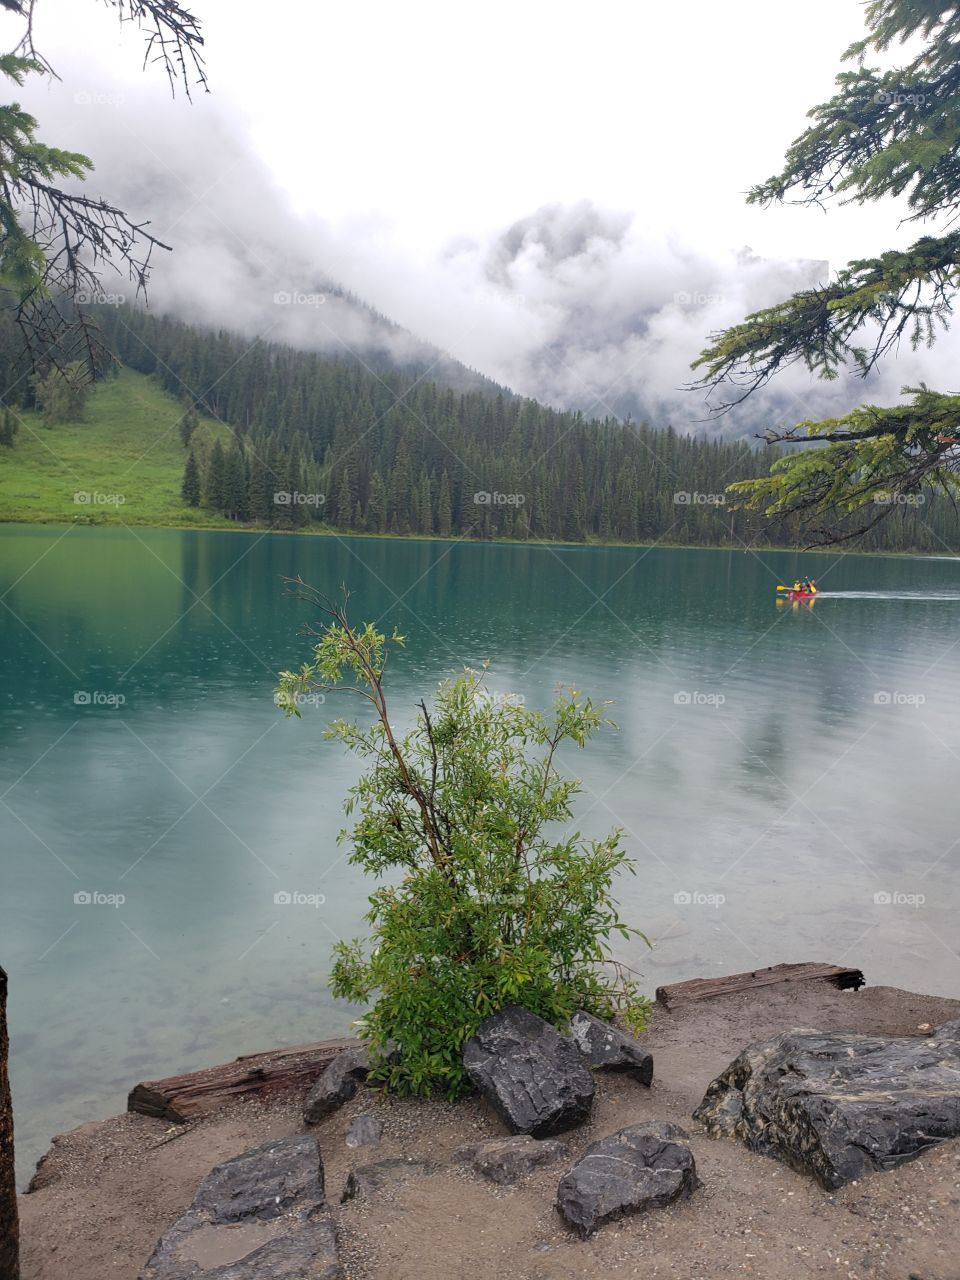 nice shot of emerald lake